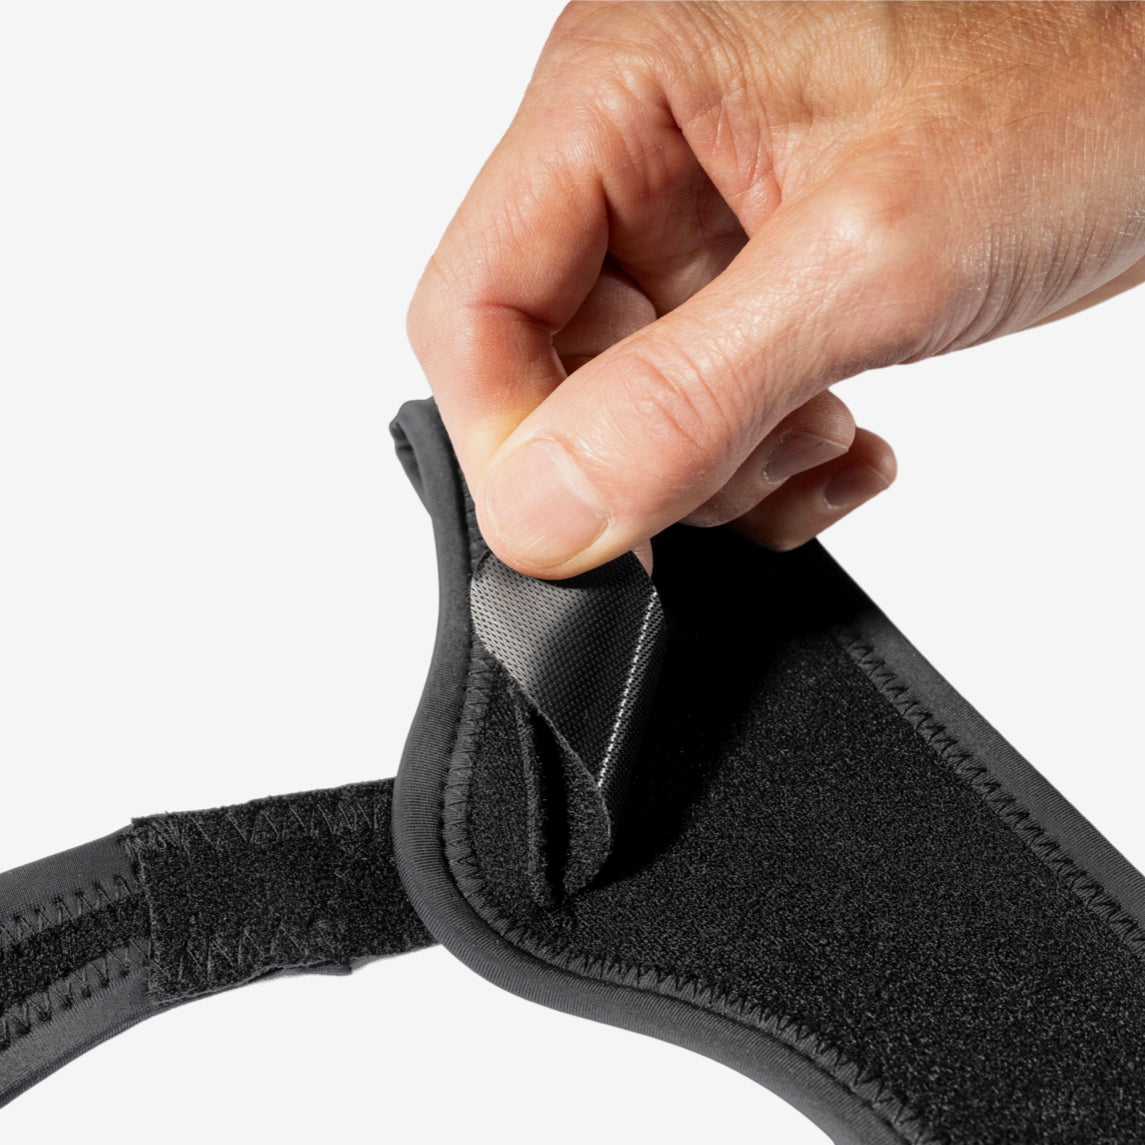 Hand showing minimalist hernia belt is fully adjustable 